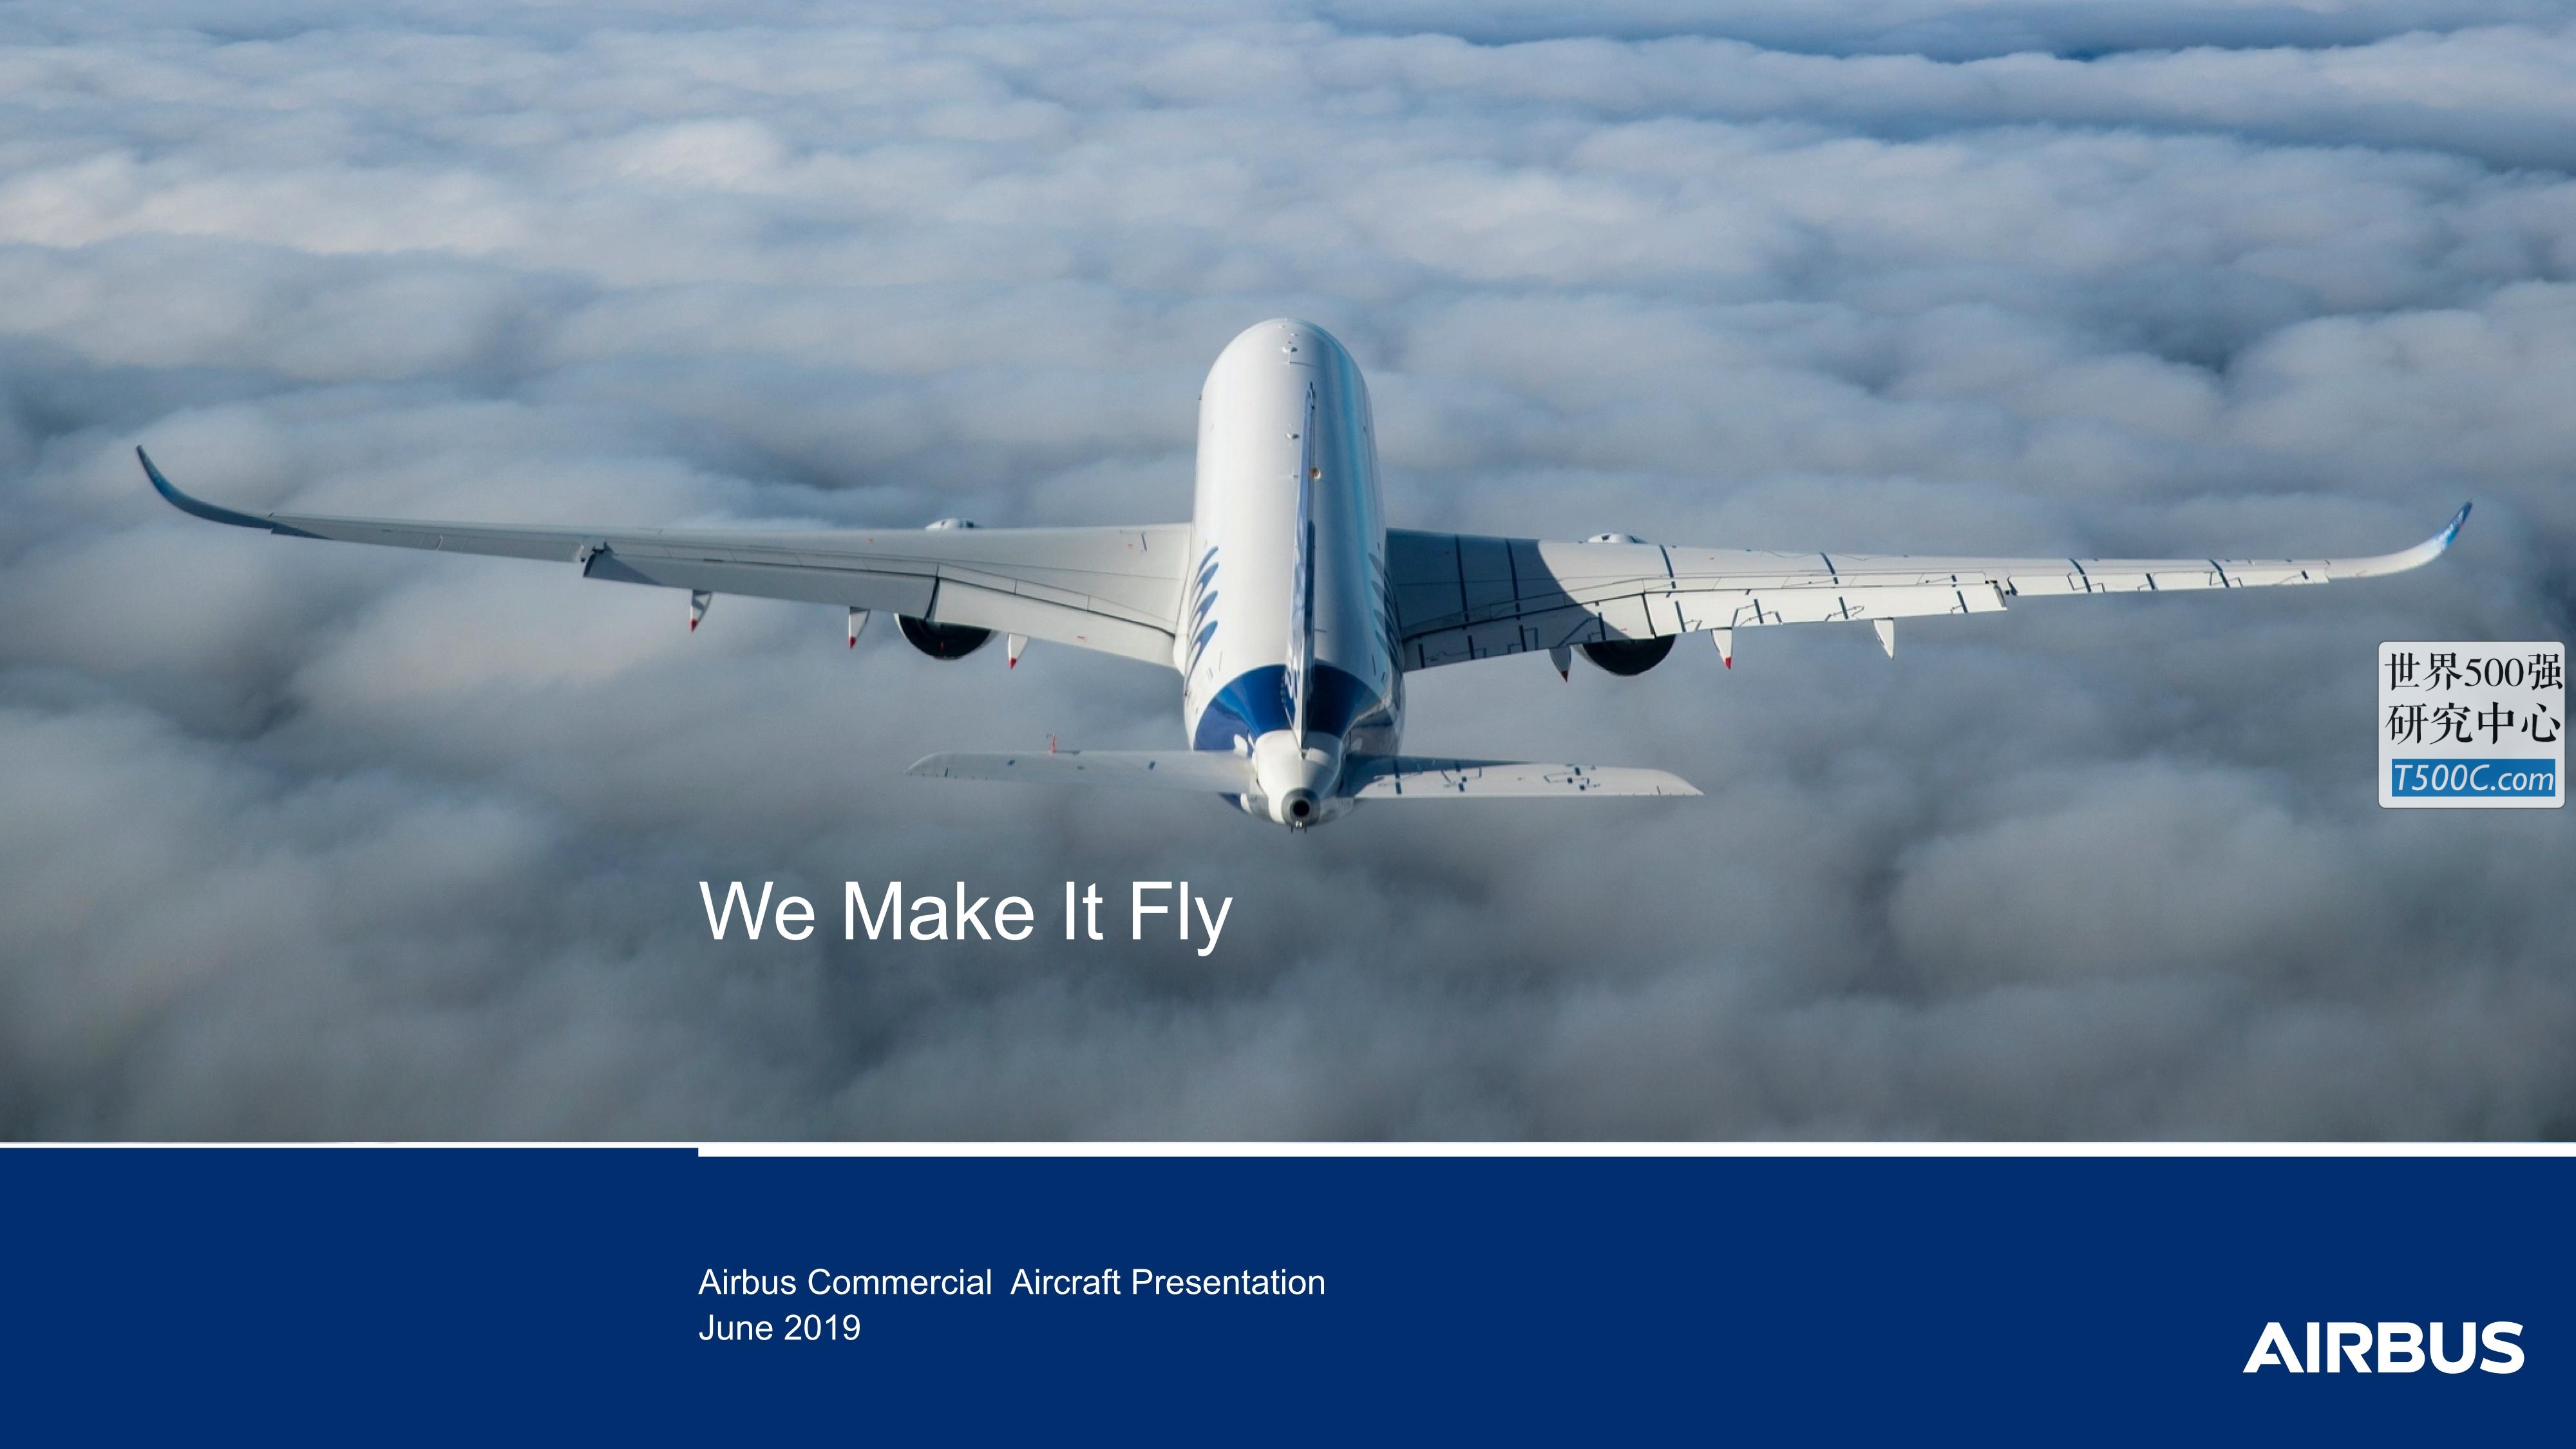 空中客车Airbus_PPT样式_2019_T500C.com_commercial aircraft corporate presentation.pdf